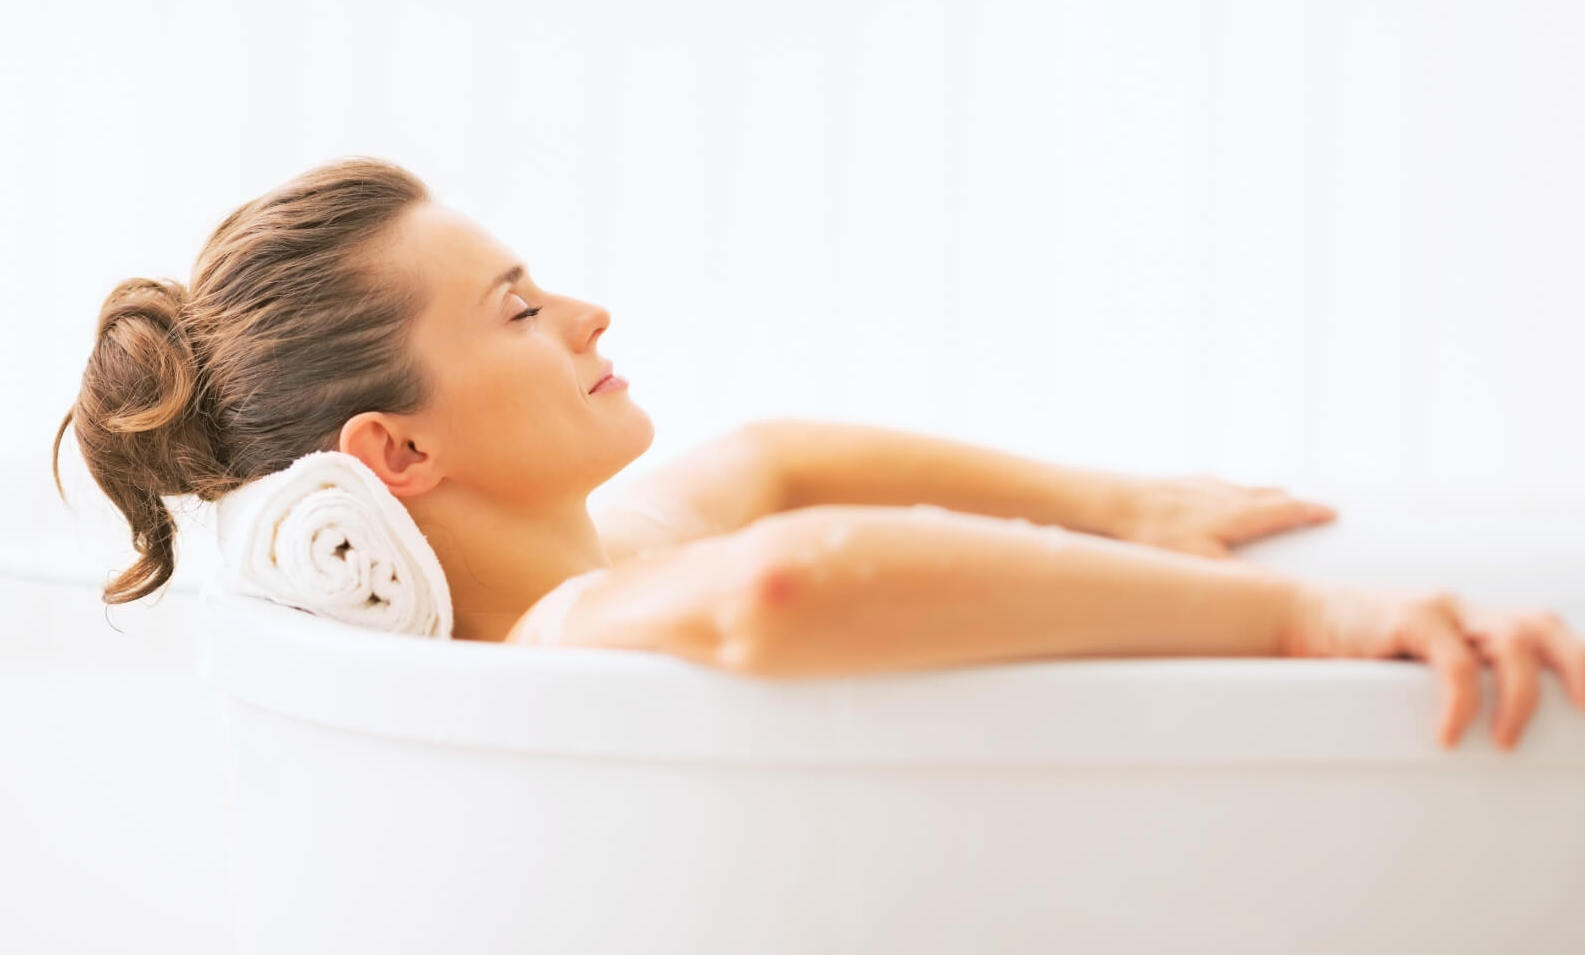 A woman in a bath enjoying a stress relief routine.